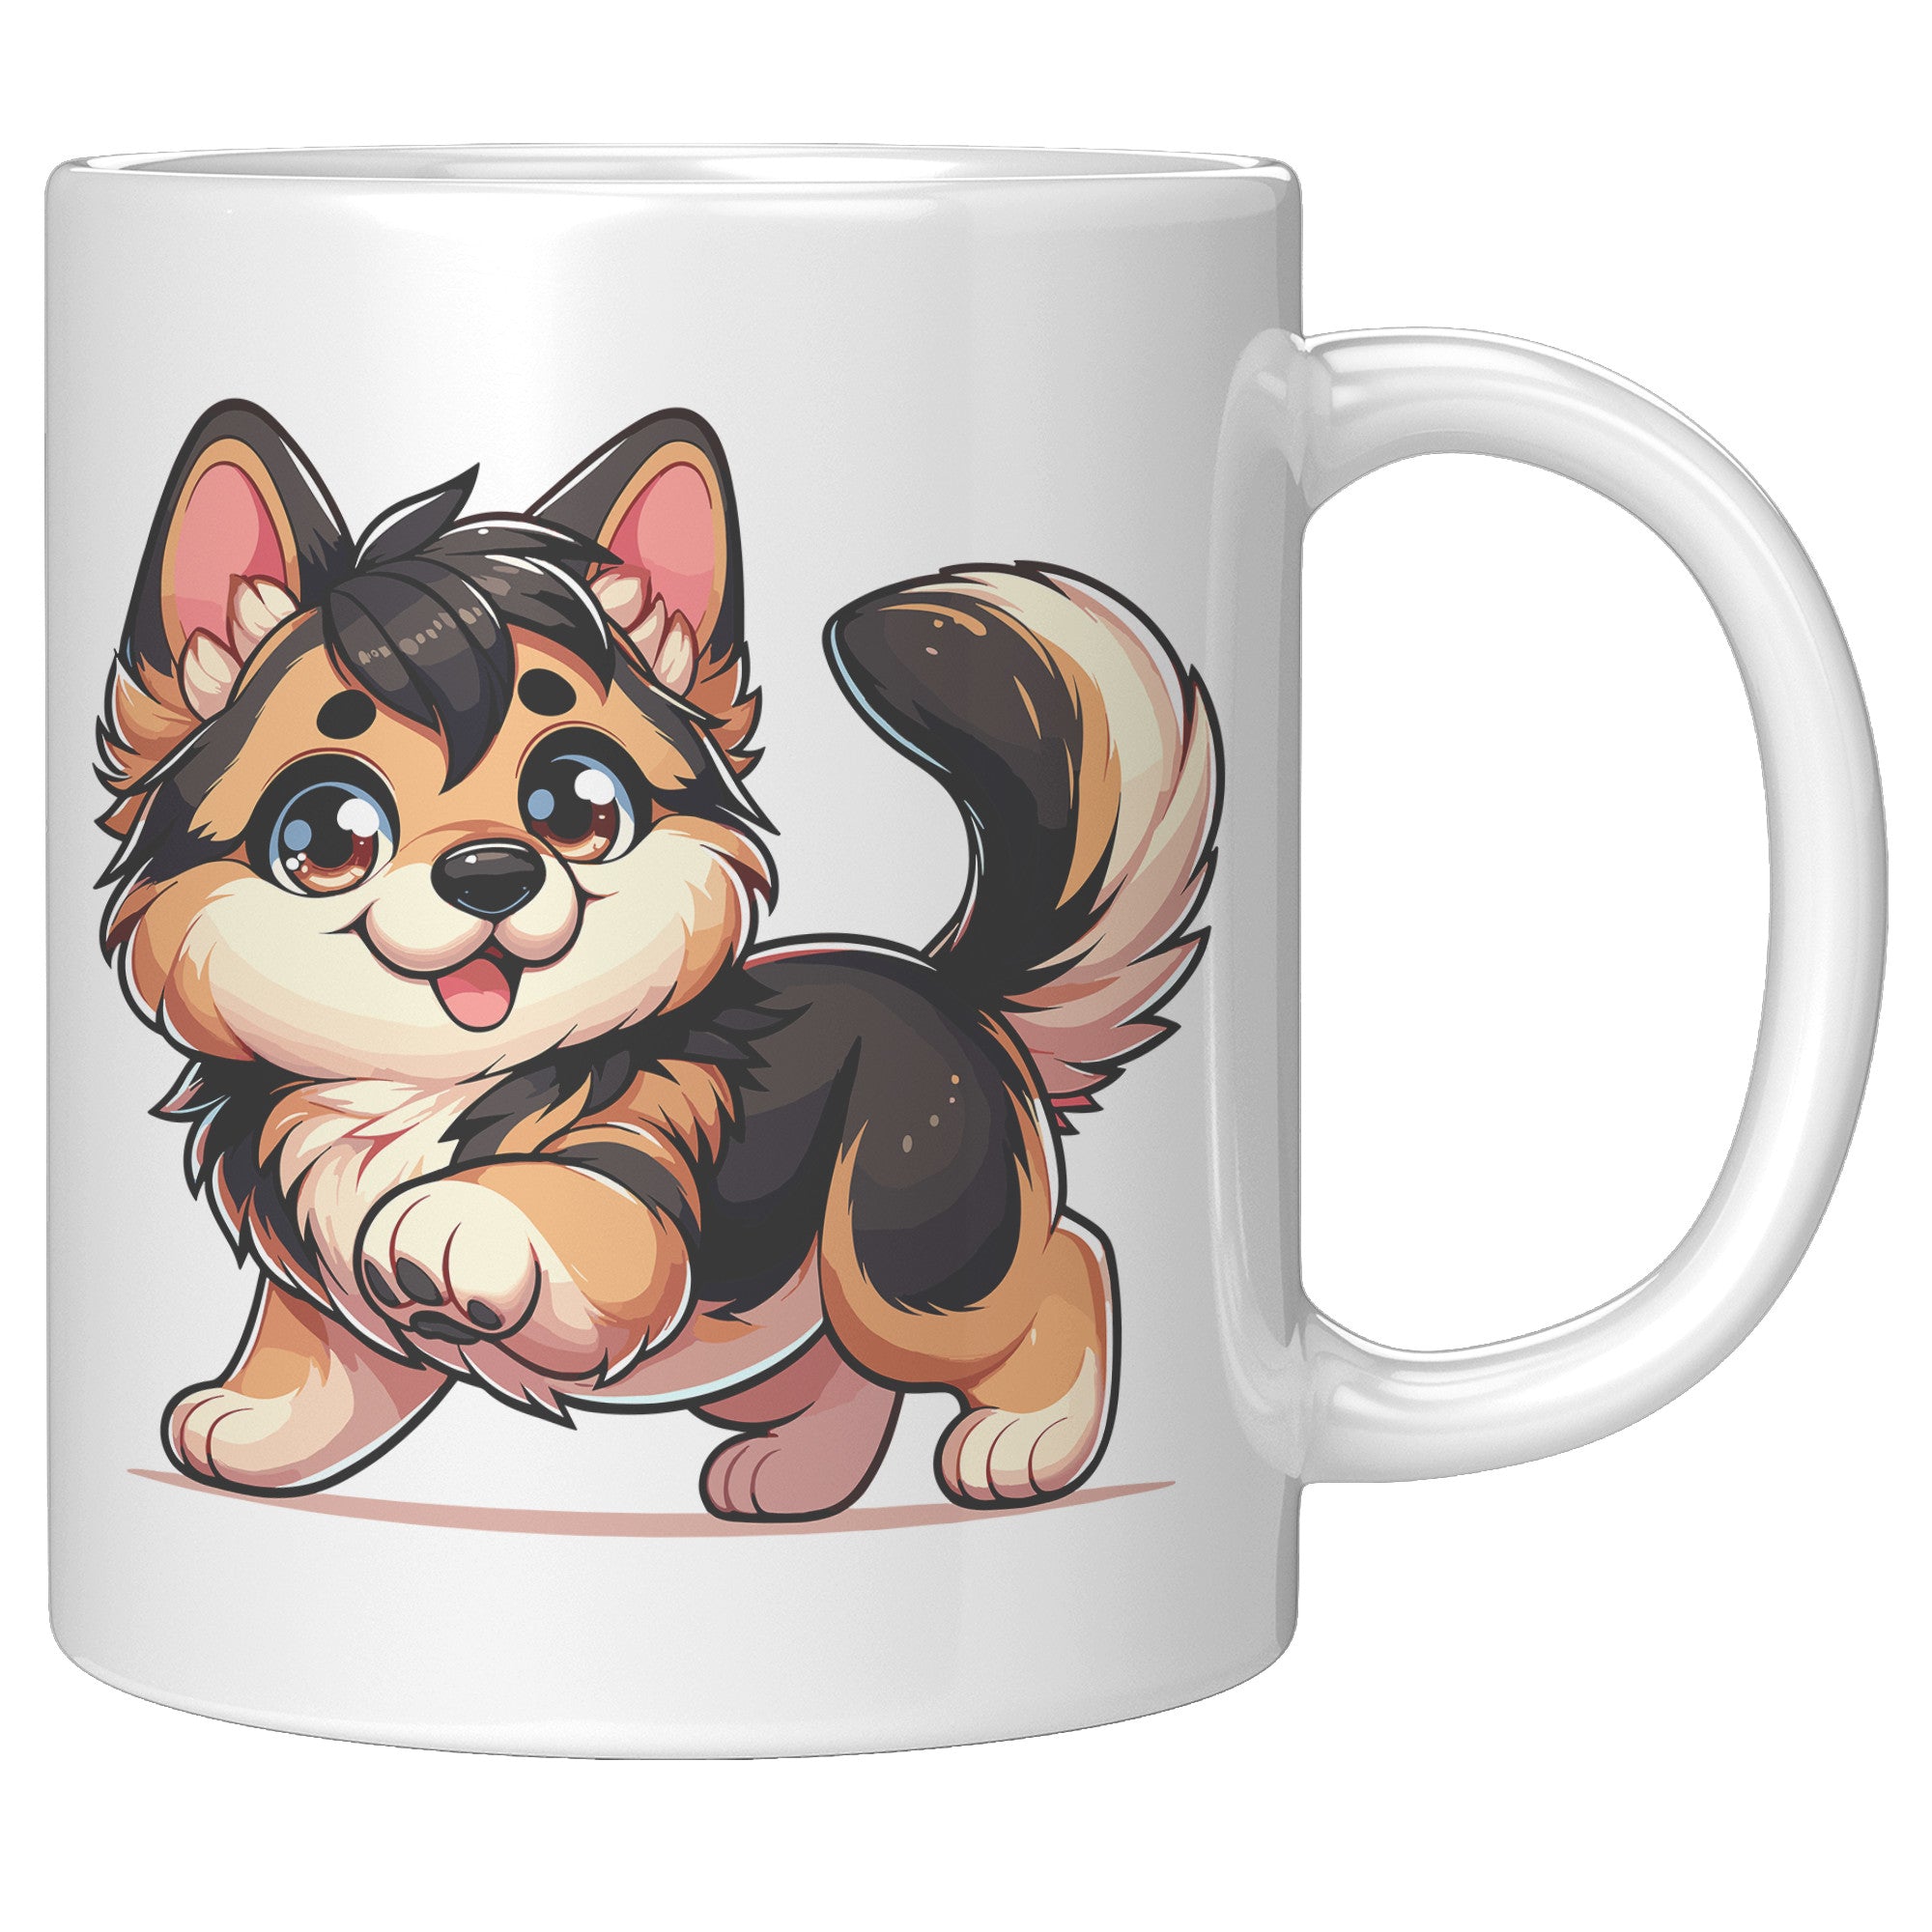 11oz German Shepherd Cartoon Coffee Mug - Loyal GSD Lover Coffee Mug - Perfect Gift for German Shepherd Owners - Protective Dog Breed Coffee Mug - G